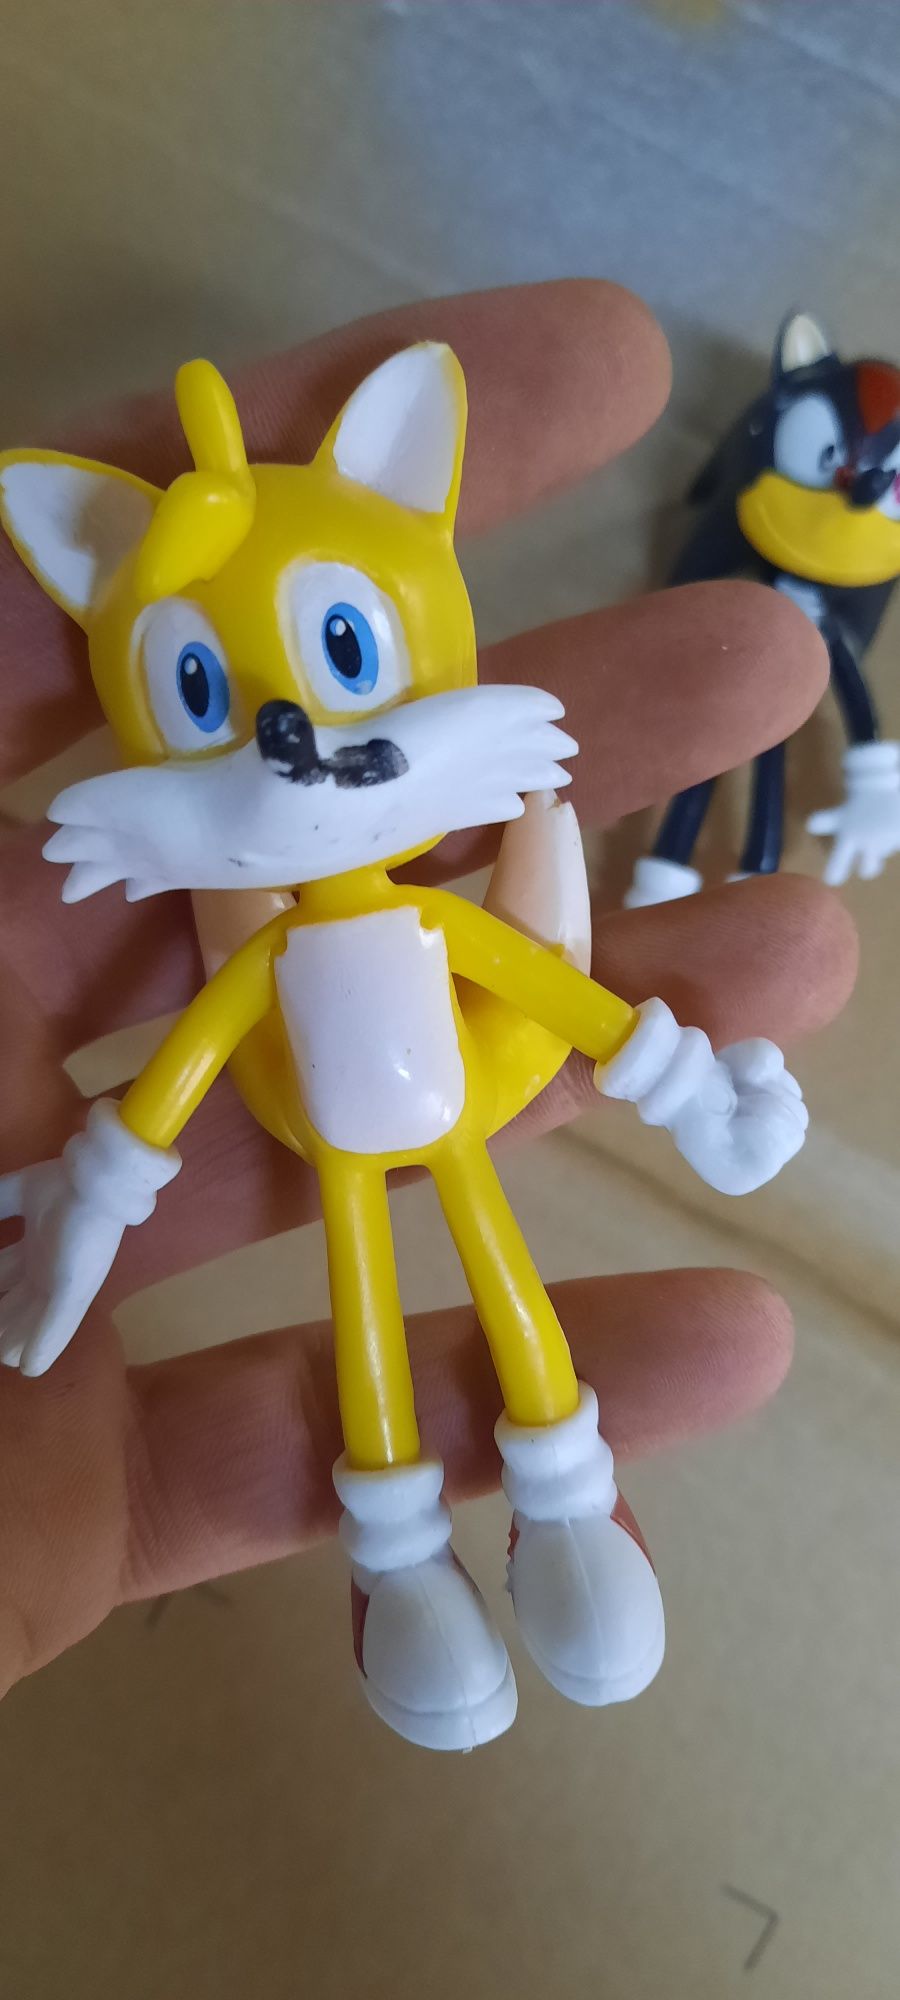 Figurki Sonic 2 szt